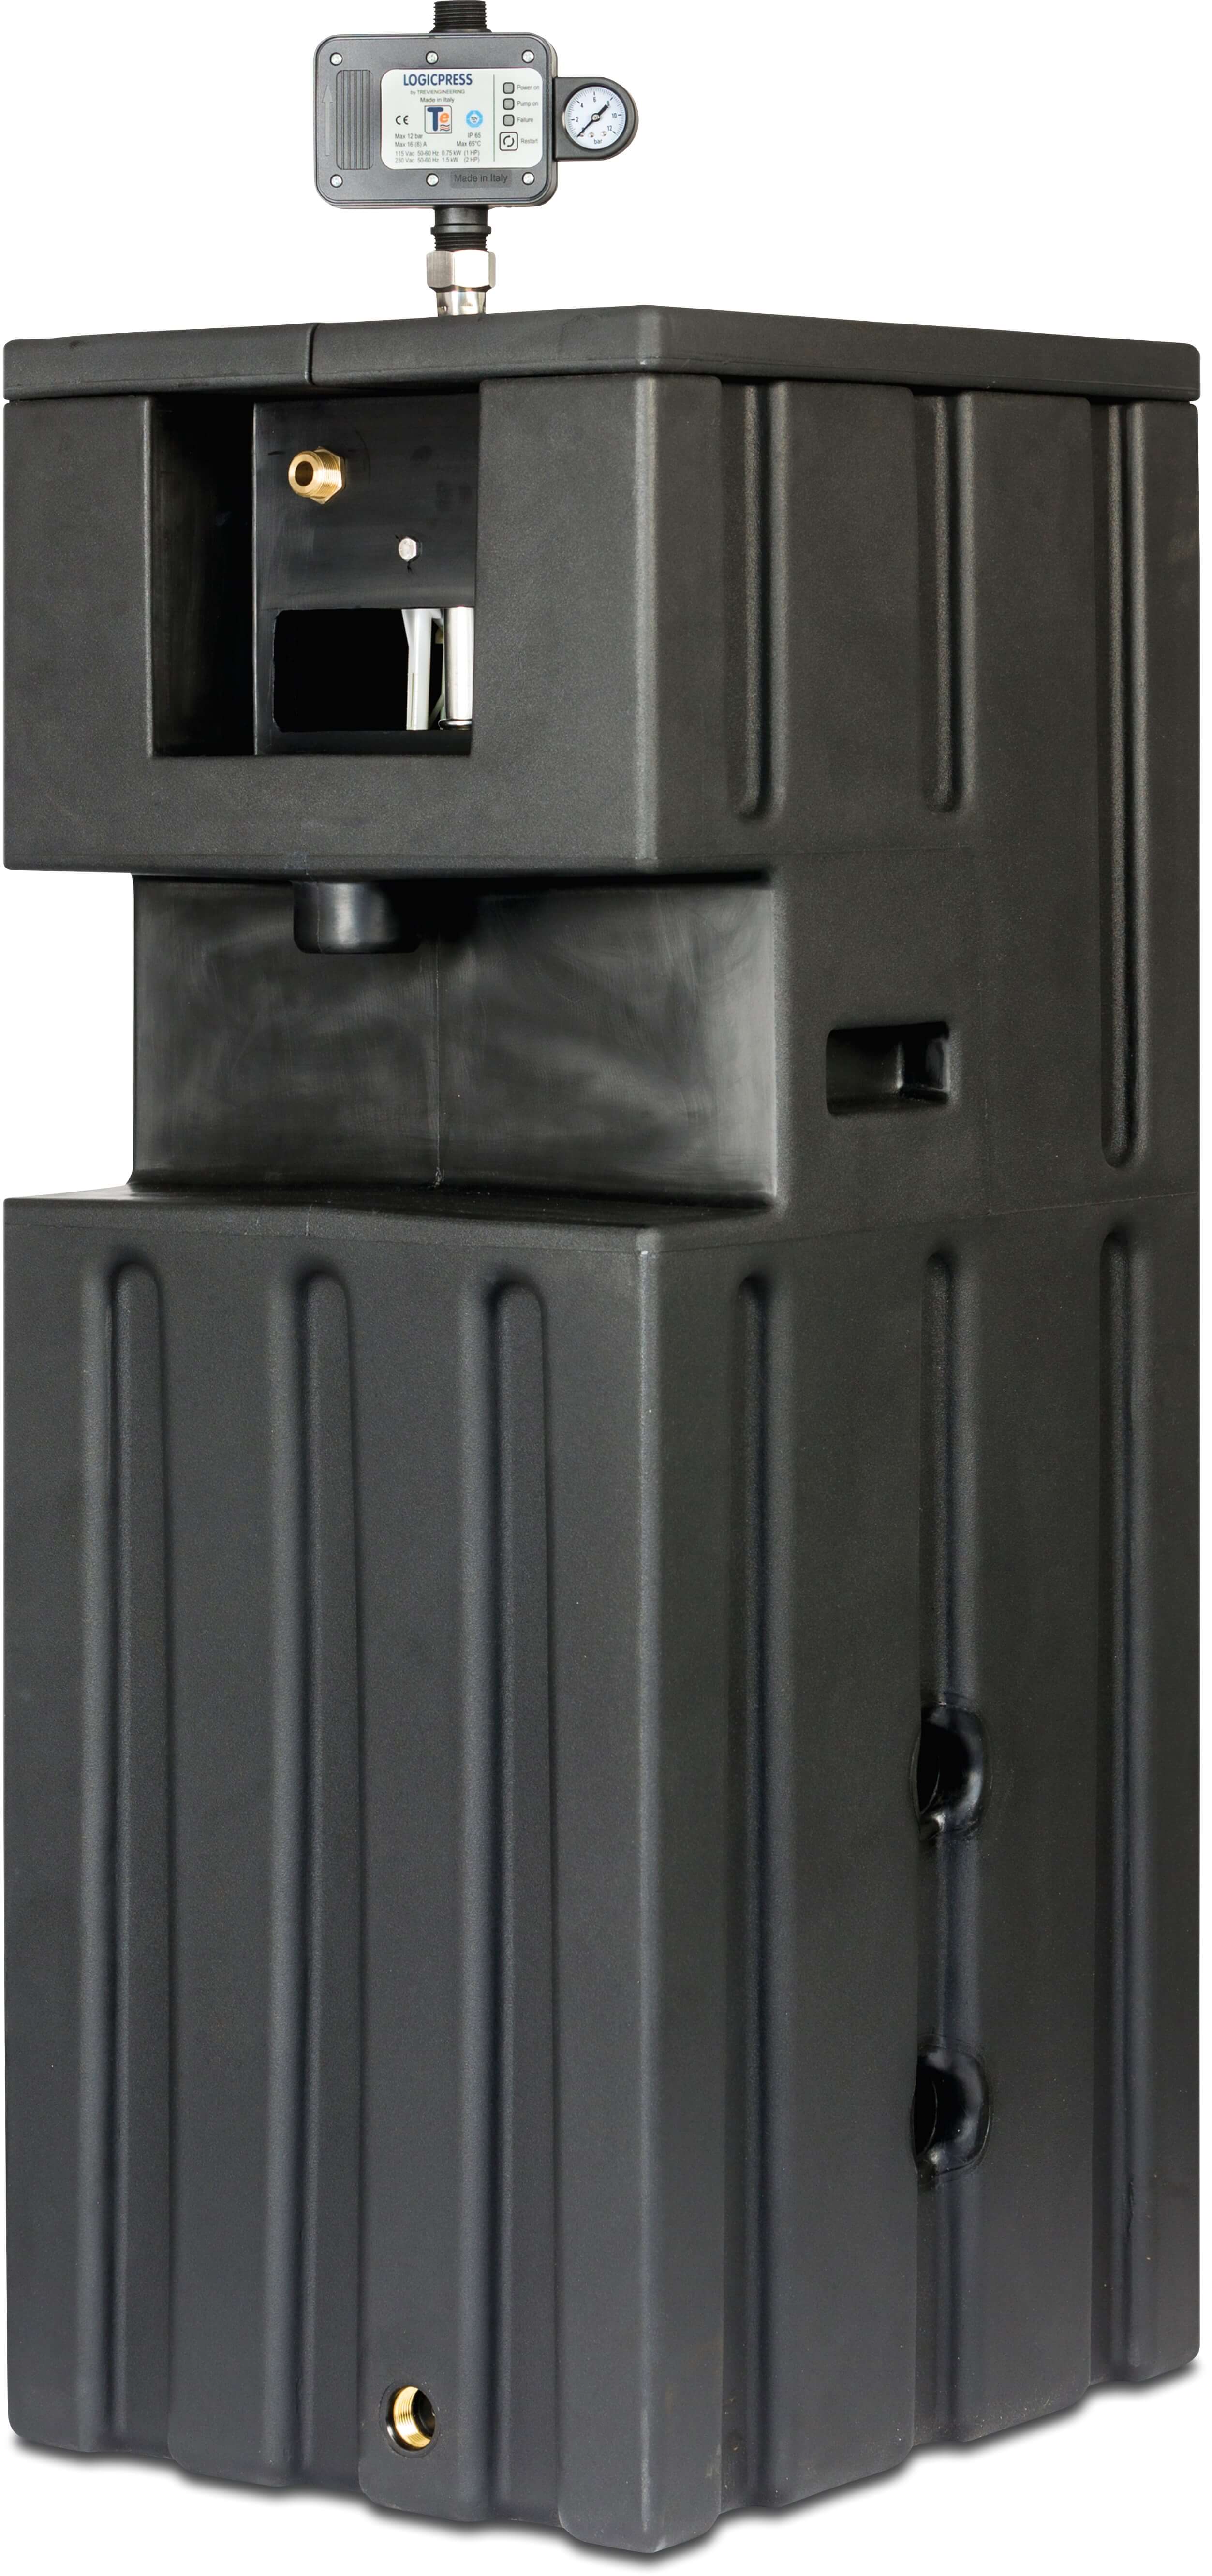 Matarvattentank 3/4" x 1" utvändig gänga 230VAC BELGAQUA type Combi DSCT med Minisub & Logicpres Set